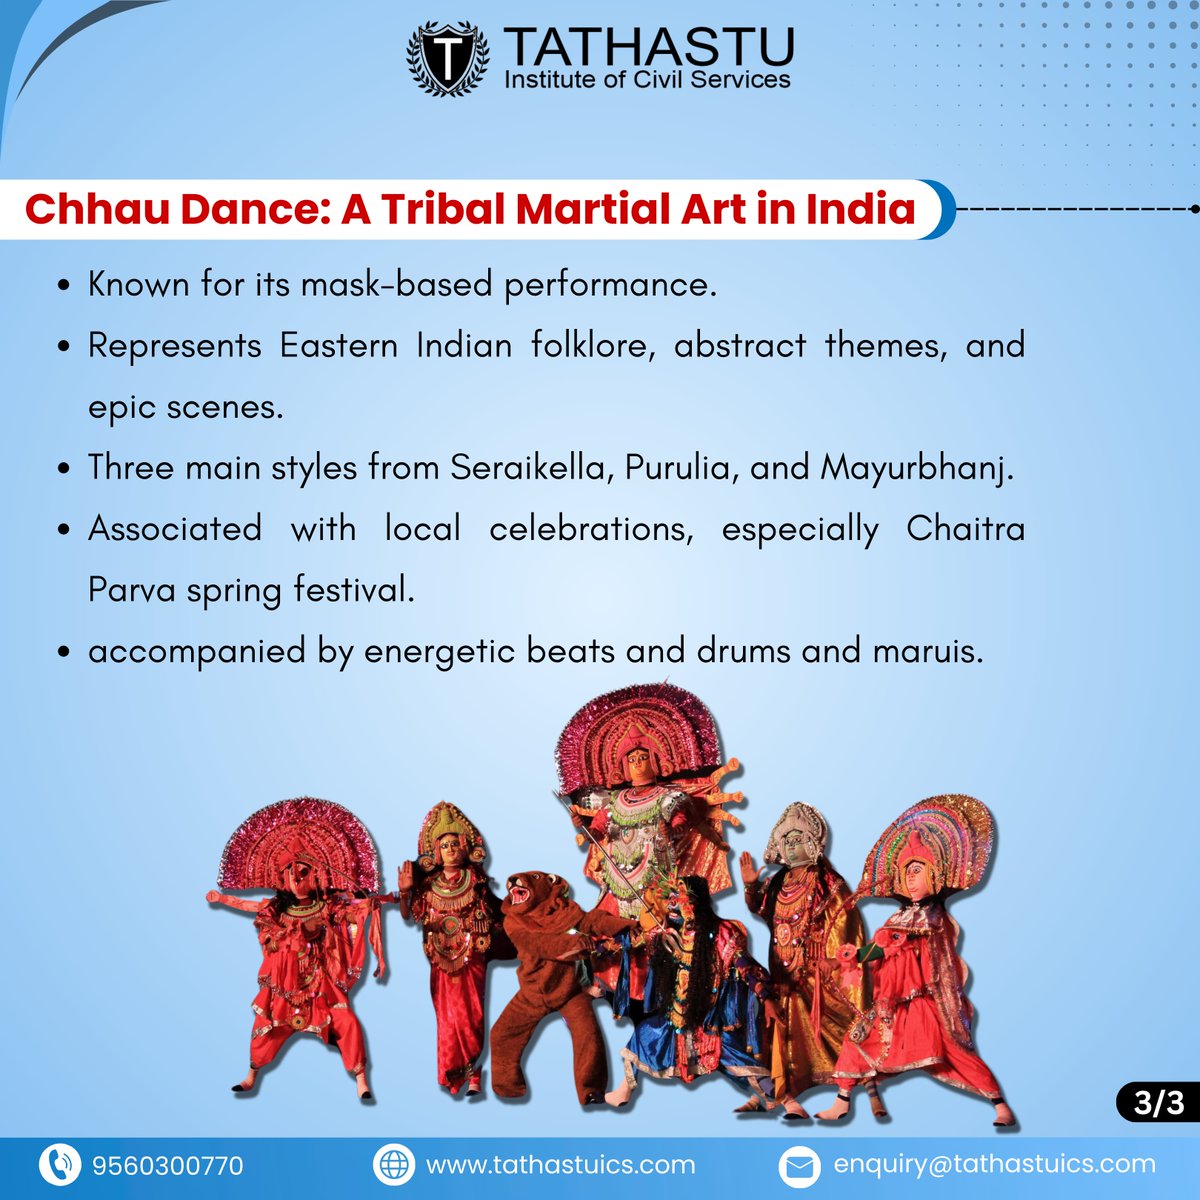 #Folk #Dance

Chhau Dance
One of the most well-known tribal martial arts of India is the Chhau Dance. 
#upsc #tathastuics #drtanujain #UPSCPreparation #upscprelims  #artculture #history #chhaudance #chaudance #chhayadance #martialarts #Mahabharata #Ramayana